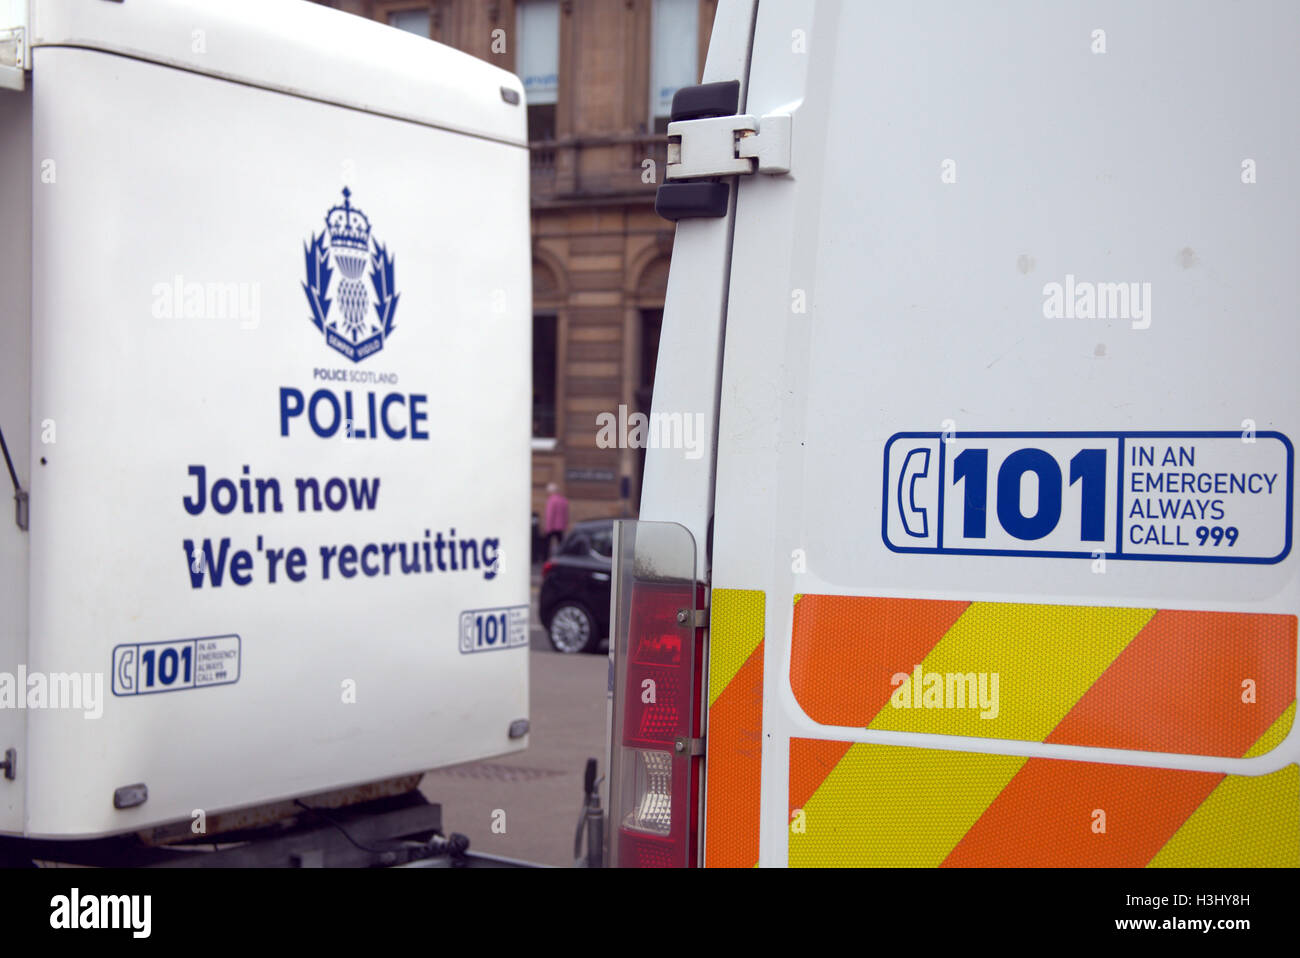 police Scotland  recruiting logos on vehicle sides Stock Photo